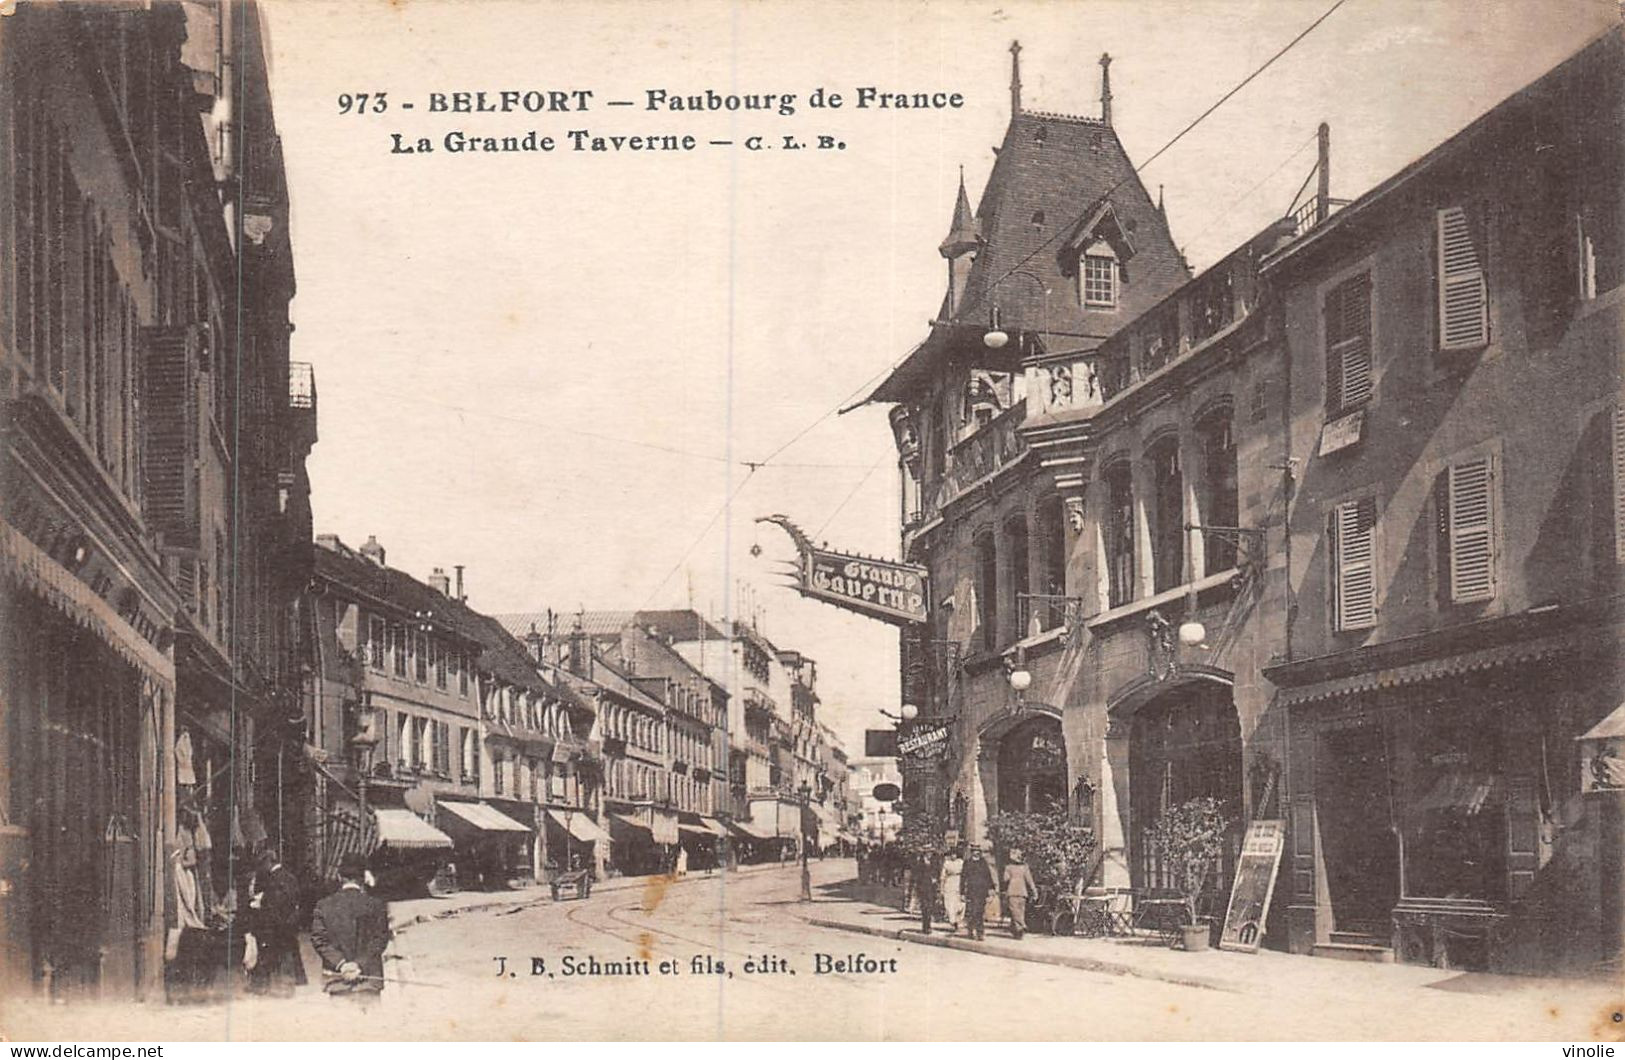 24-5171 :  BELFORT. LA GRANDE TAVERNE FAUBOURG DE FRANCE - Belfort - City